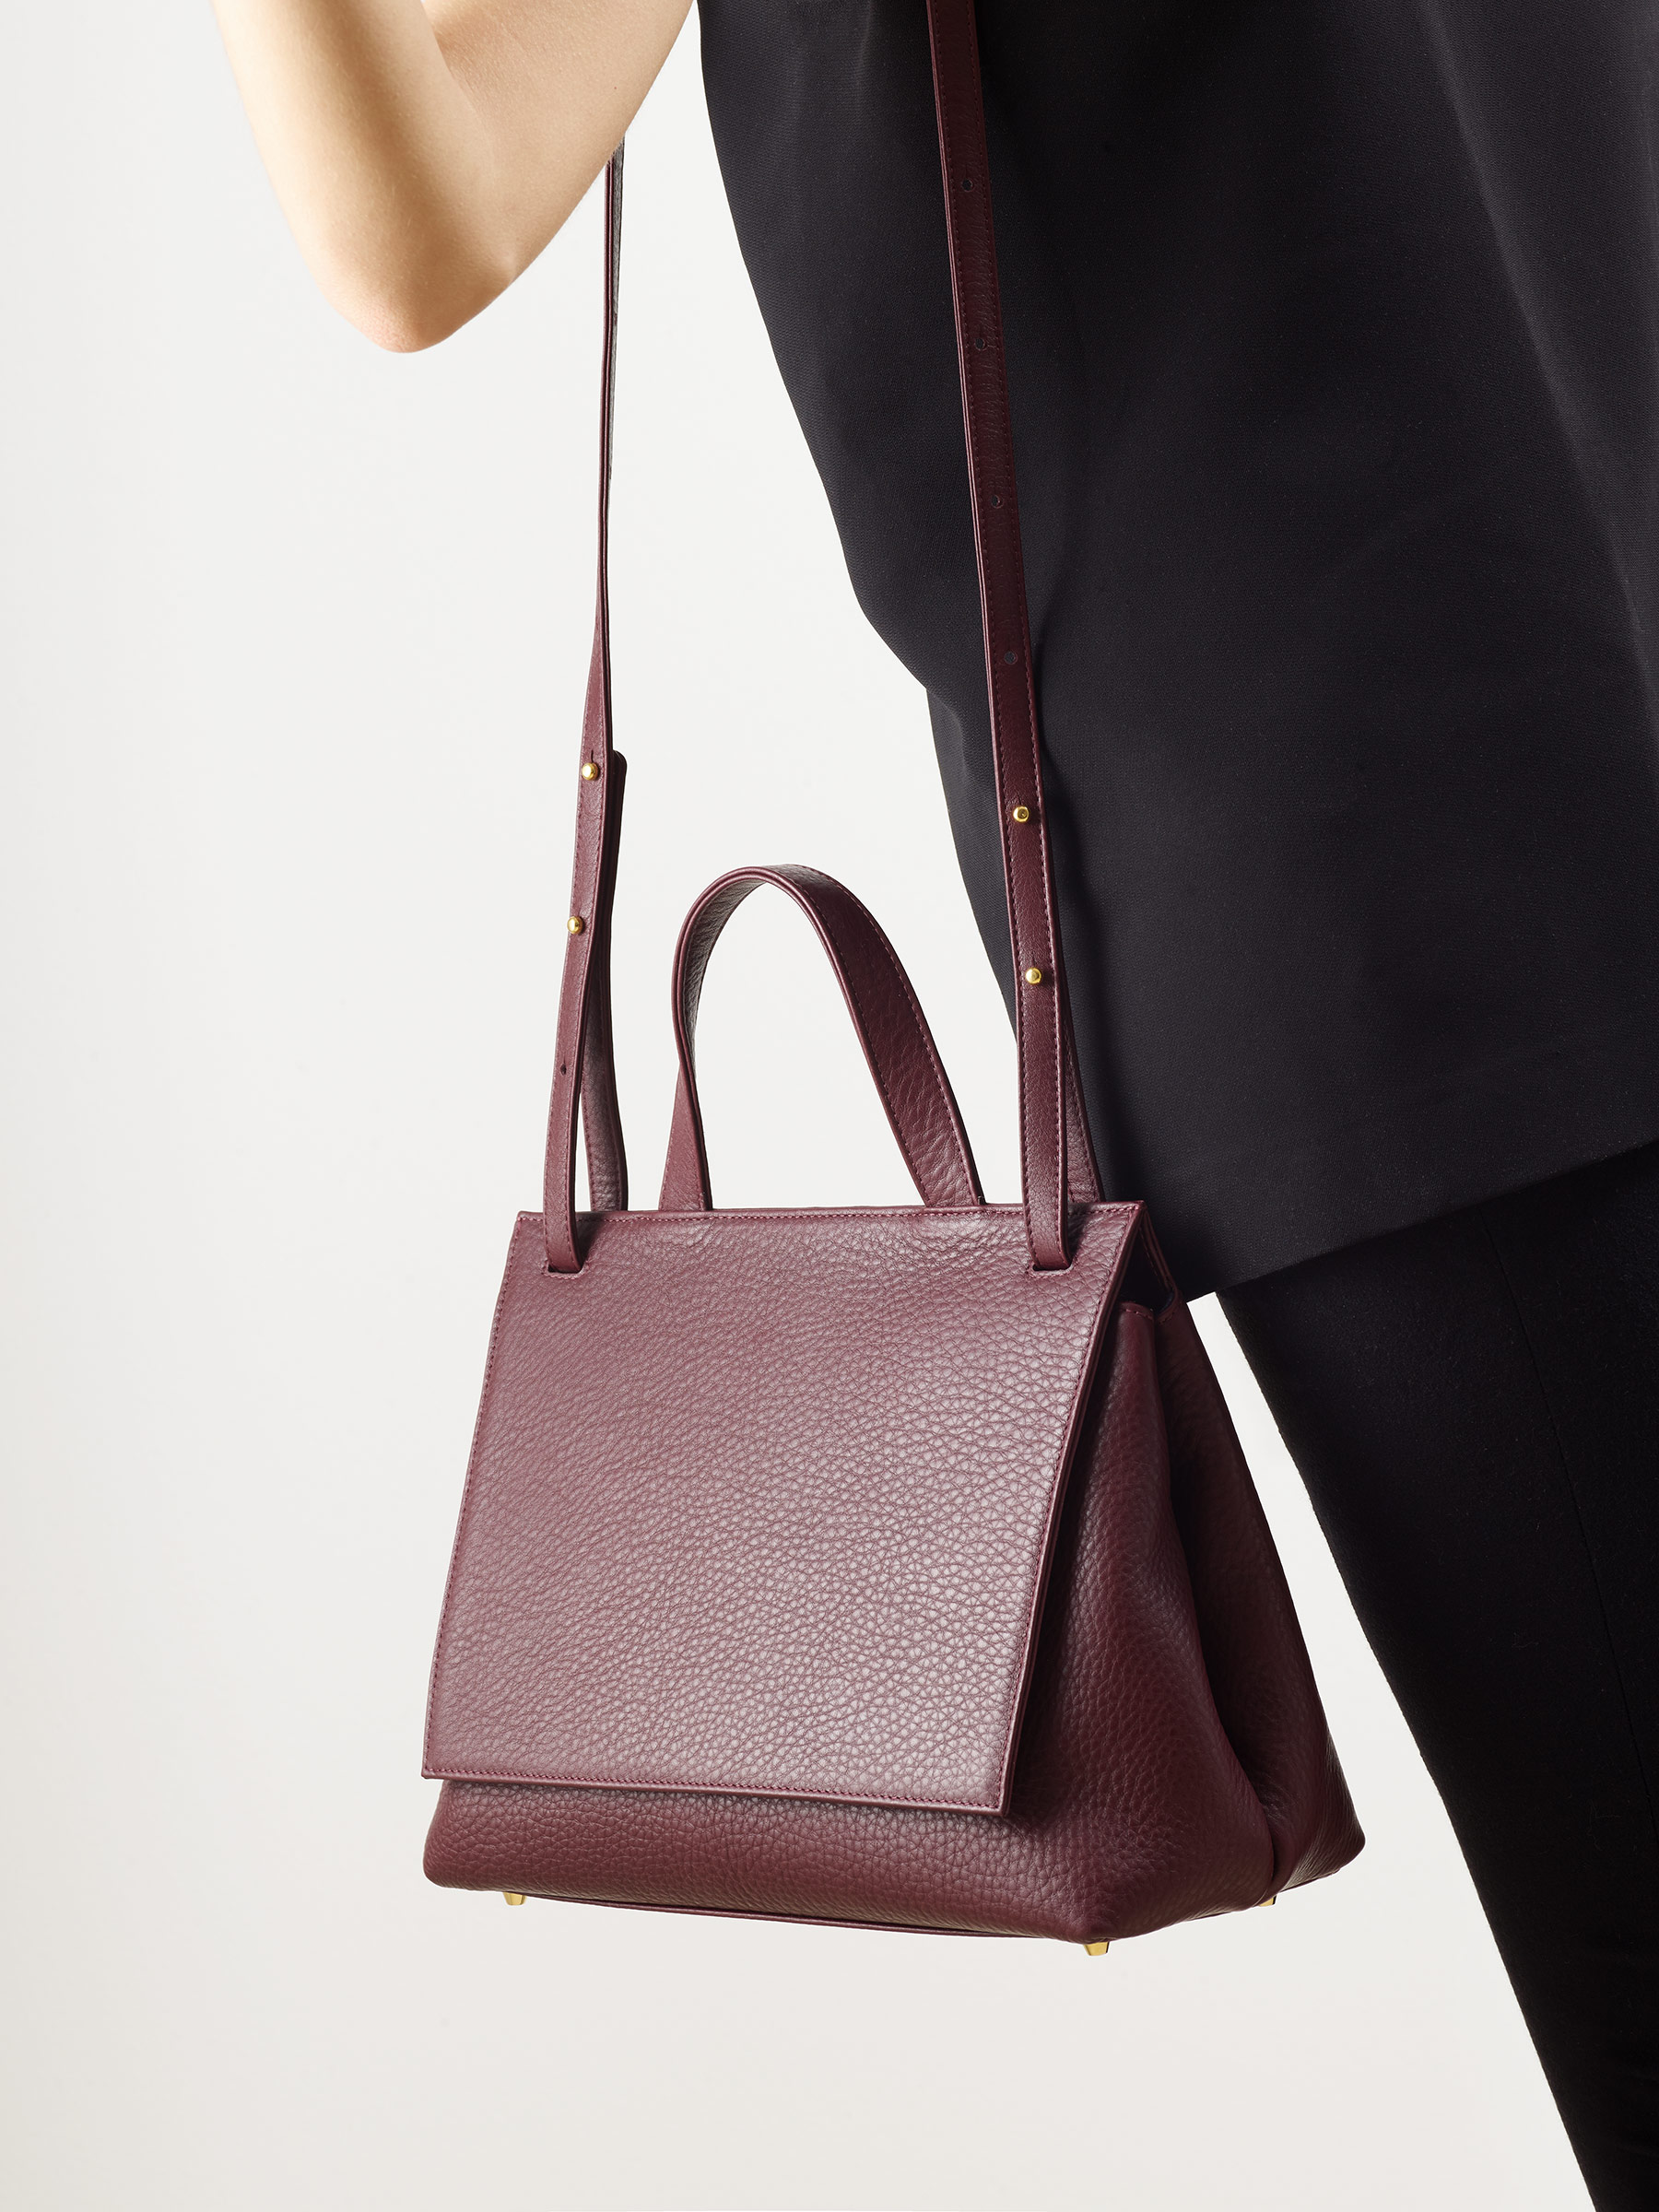 Michael Kors Burgundy Snakeskin Bag Ciara Pebble Leather Luxury Bag | eBay